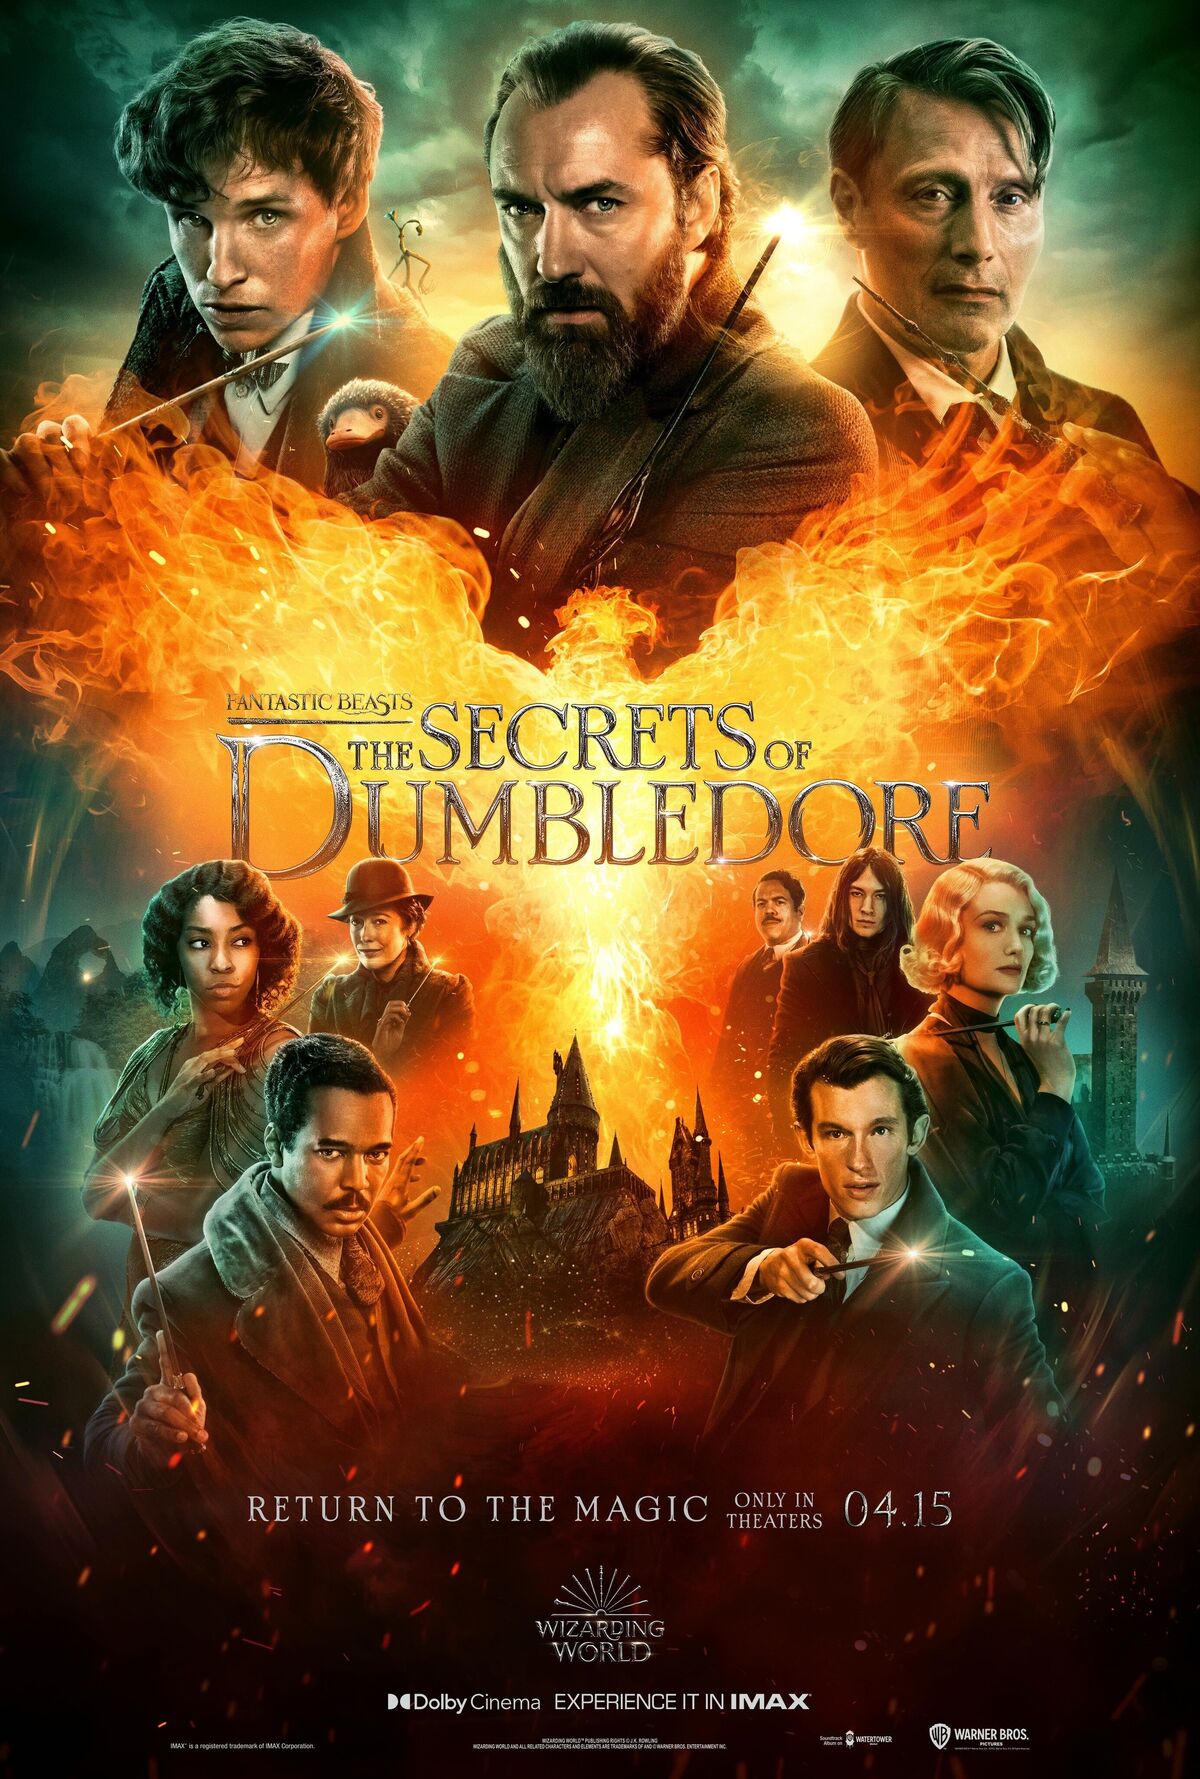 Fantastic Beasts The Secrets of Dumbledore Warner Bros picture